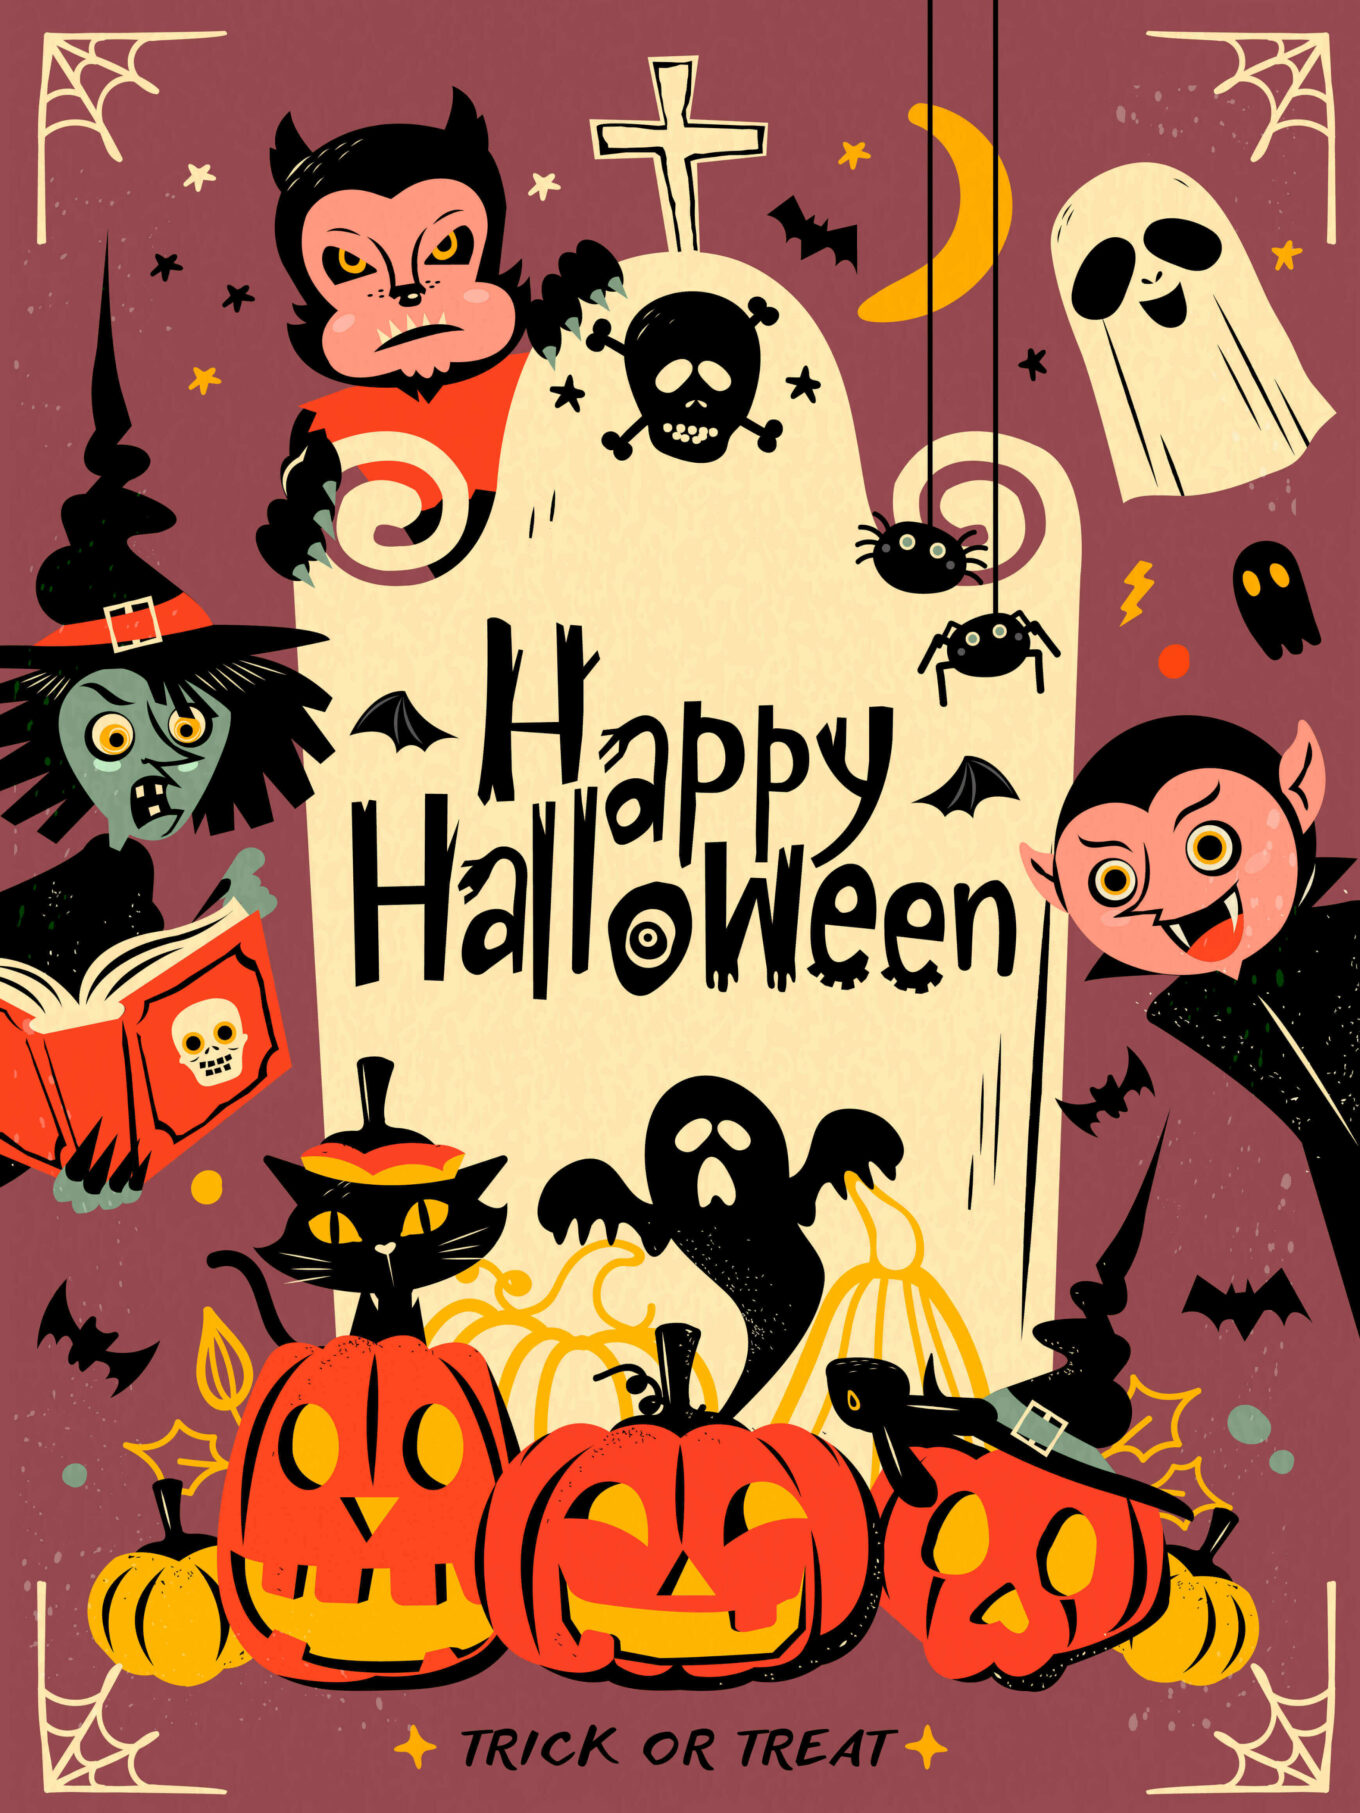 Halloween-themed illustration that says "Happy Halloween"